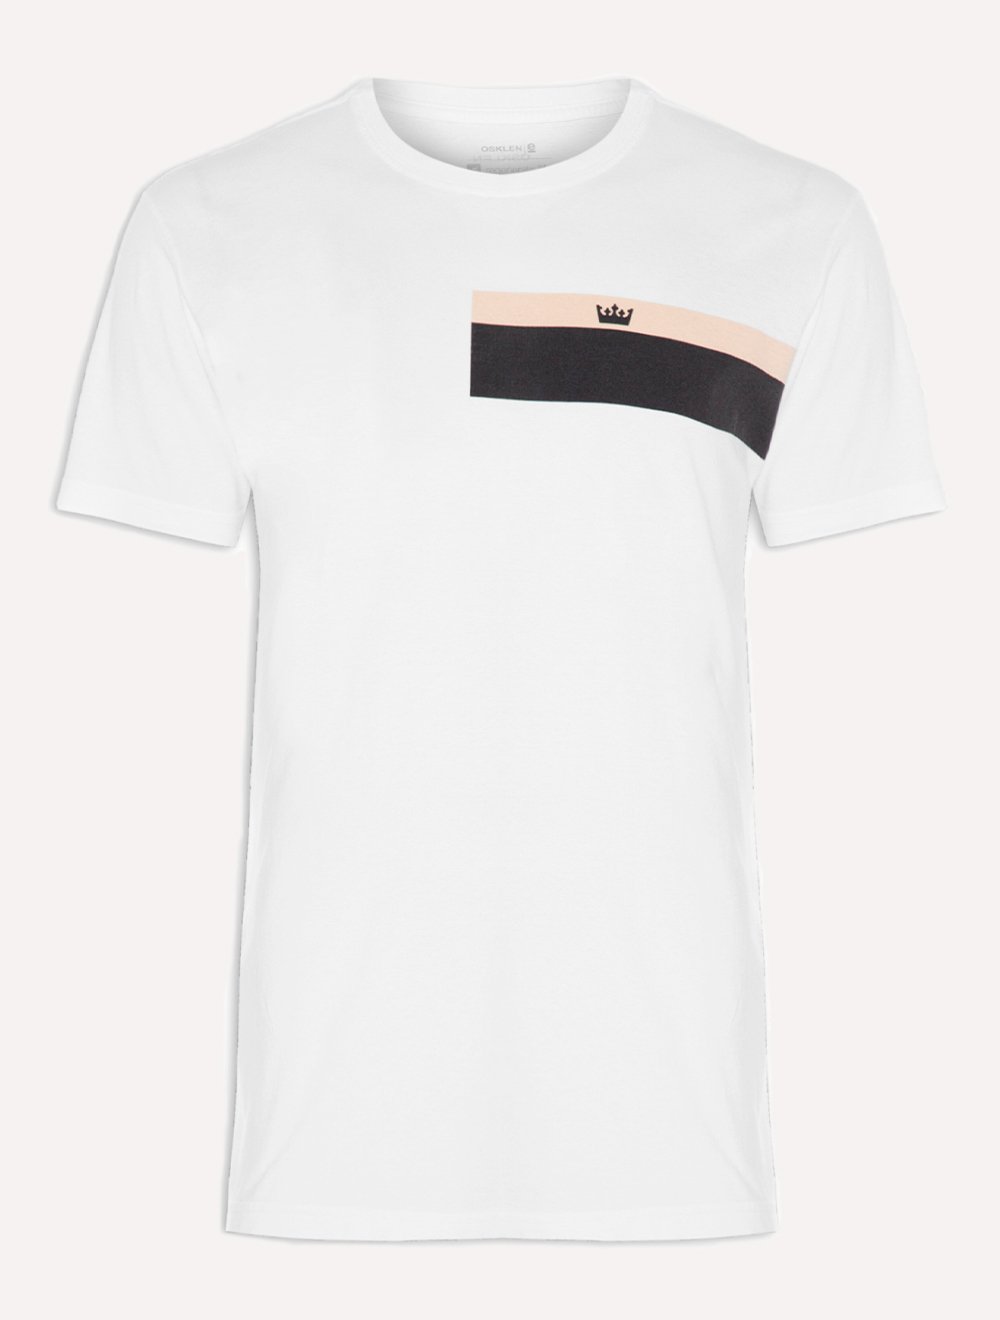 Camiseta Osklen Masculina Regular Stone Listrado Black Sand Branca